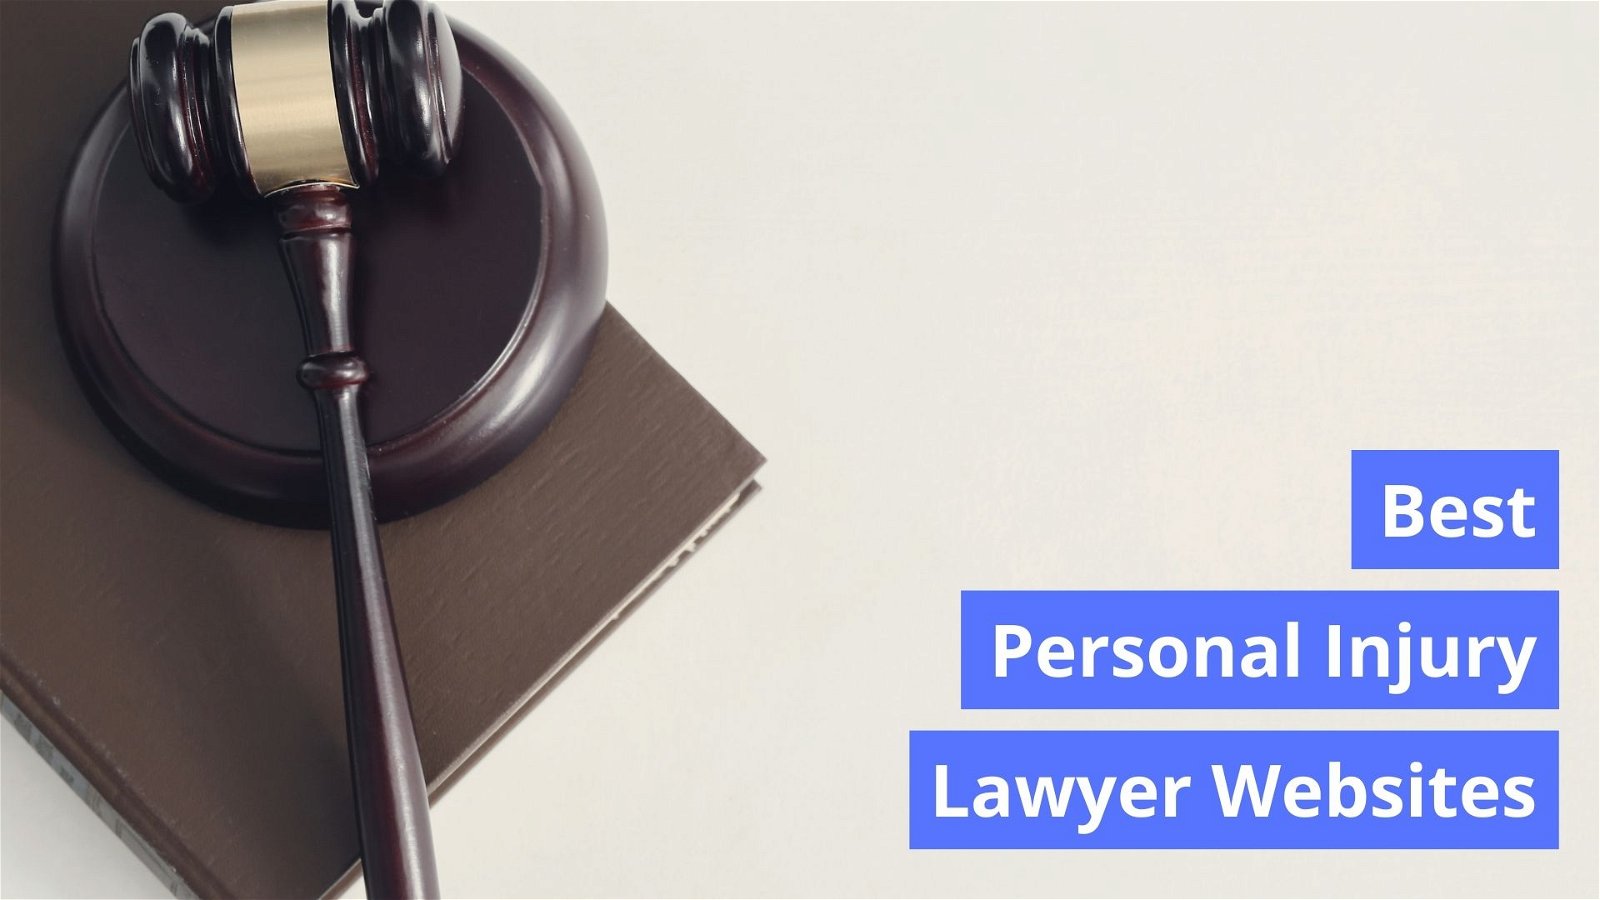 Best Personal Injury Lawyer Websites